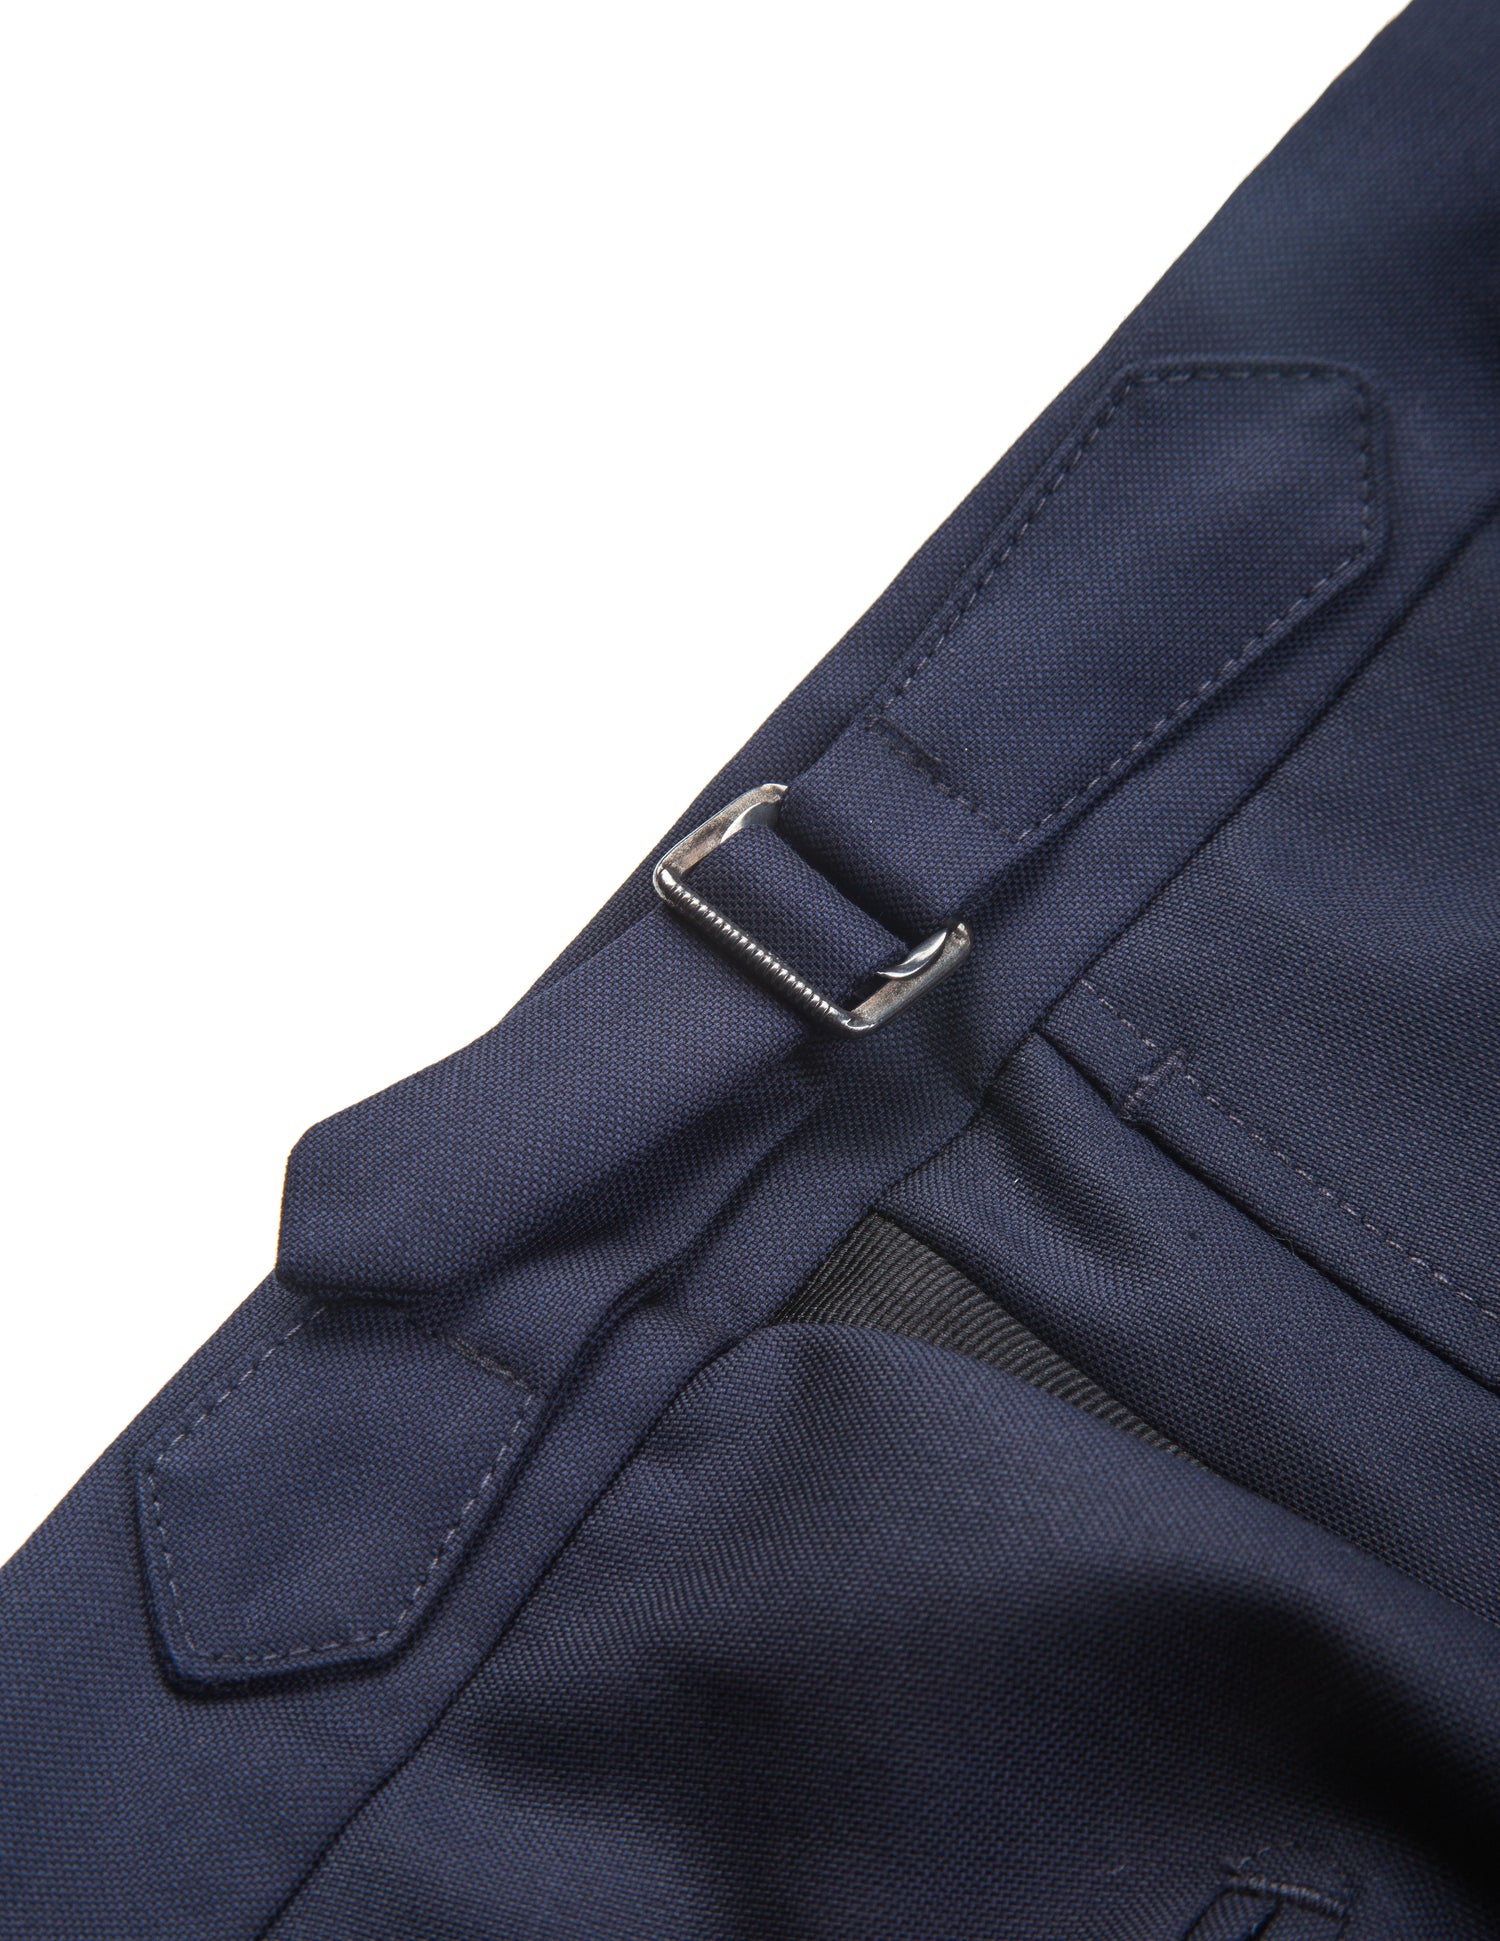 Detail of BKT50 Tuxedo Trouser in Super 110s - Navy with Grosgrain Stripe showing side adjuster